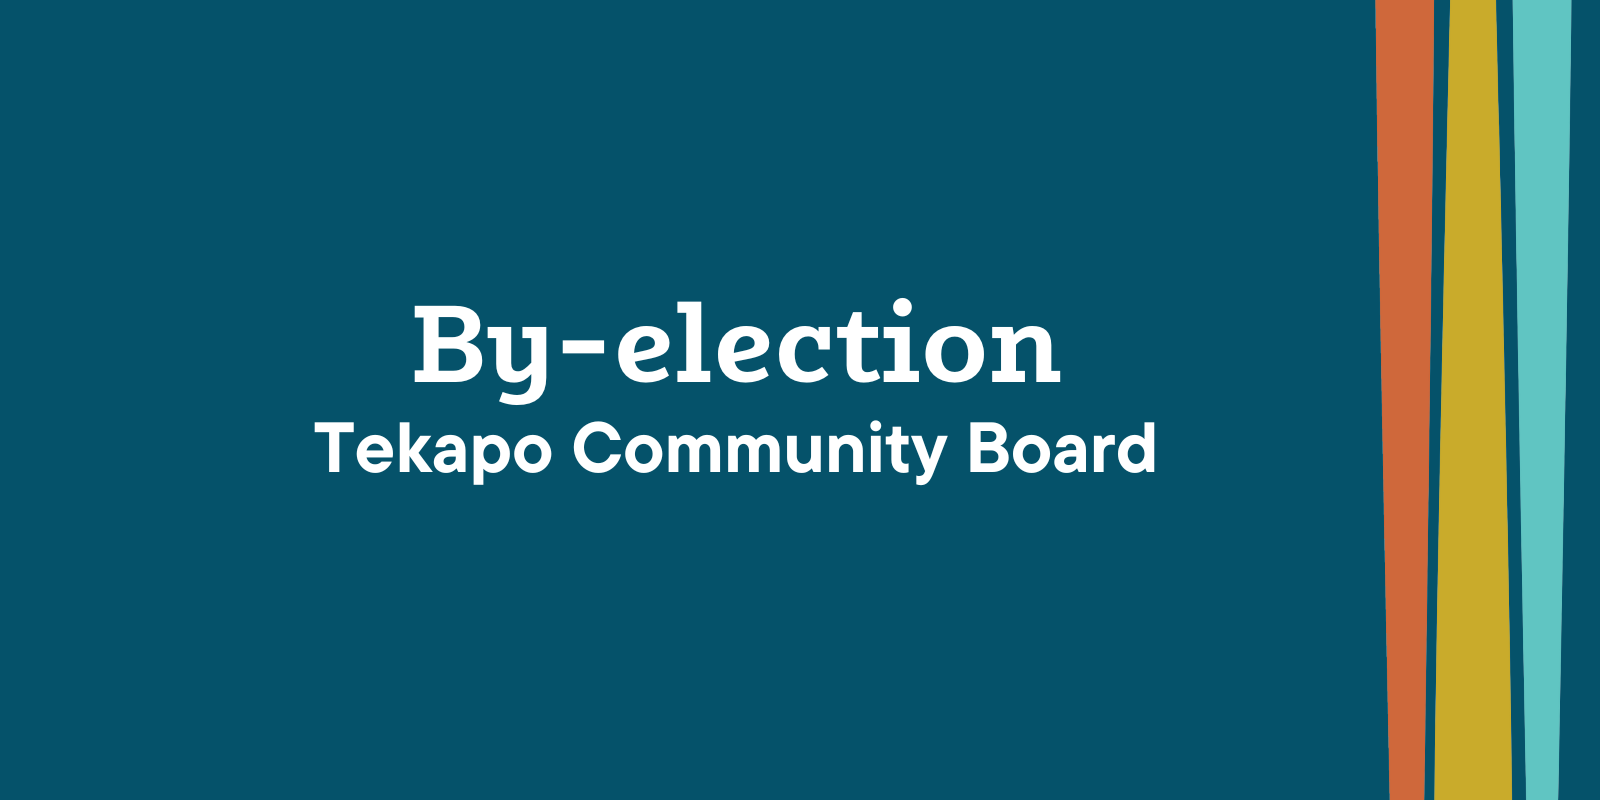 Tekapo Community Board - By-election banner image